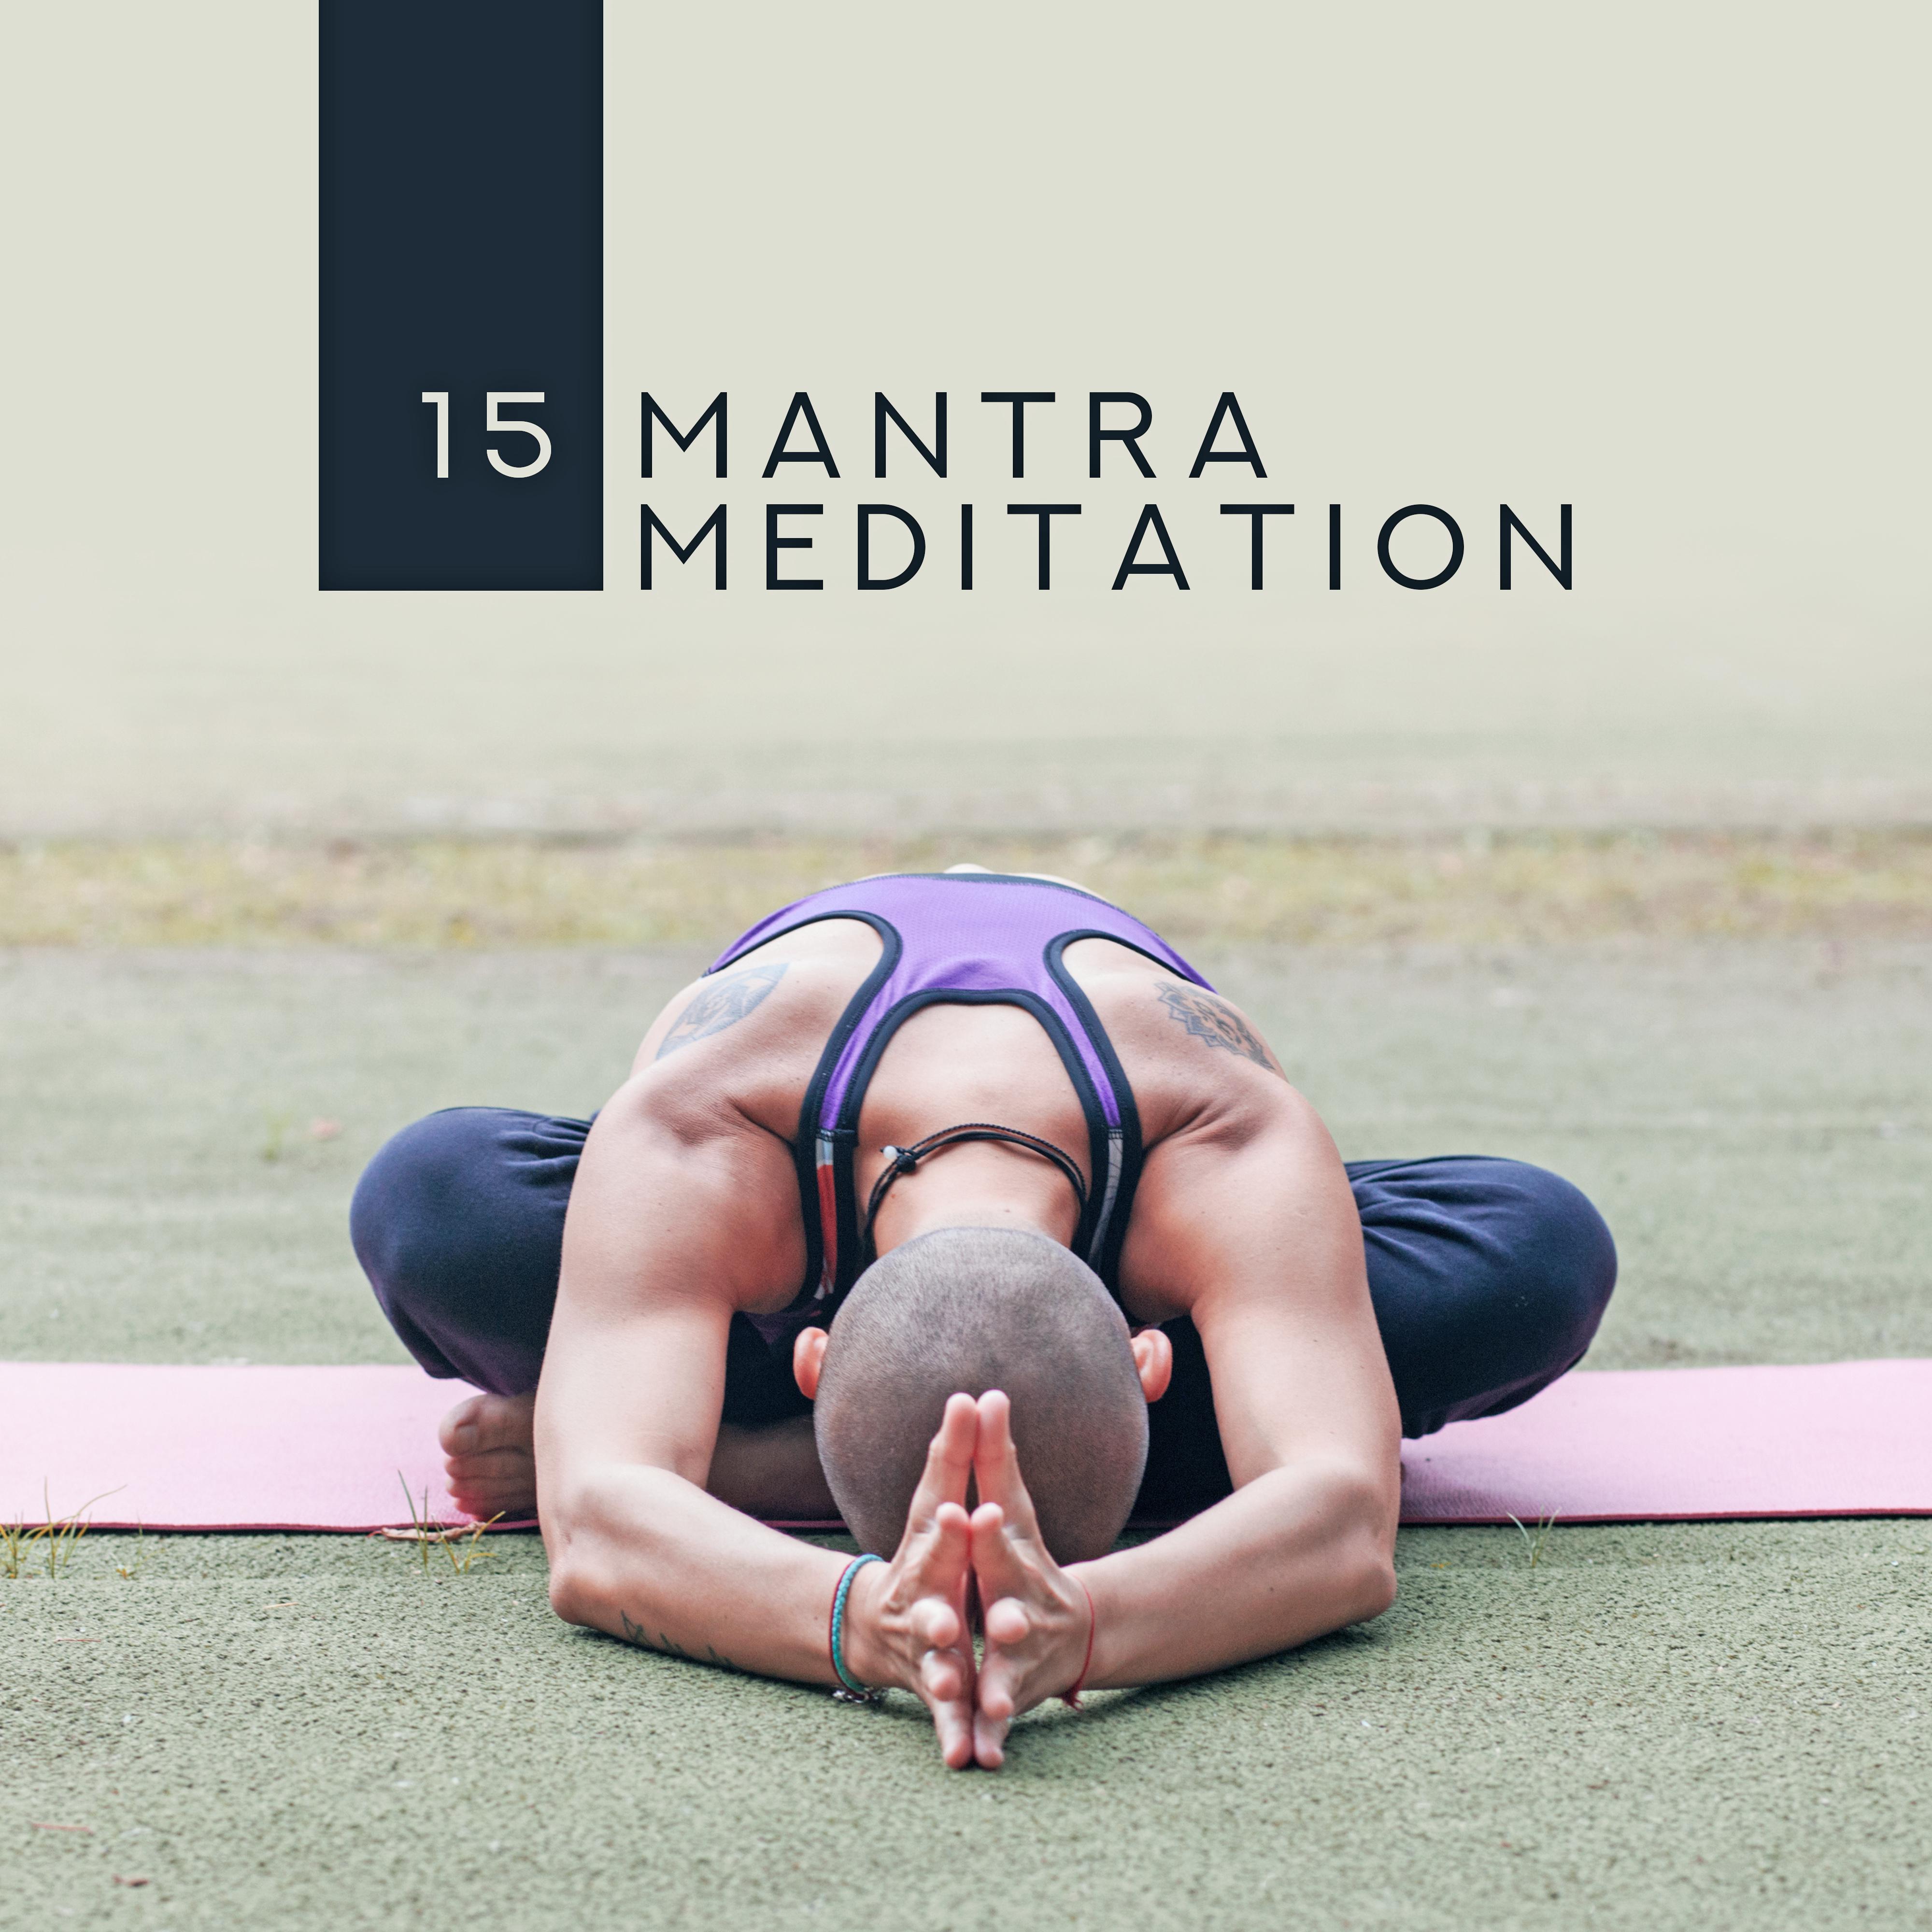 15 Mantra Meditation  Reiki, Zen, 15 Oriental Sounds for Yoga, Meditation, Spiritual Awakening, Inner Bliss, Chakra Zone, Yoga Practice